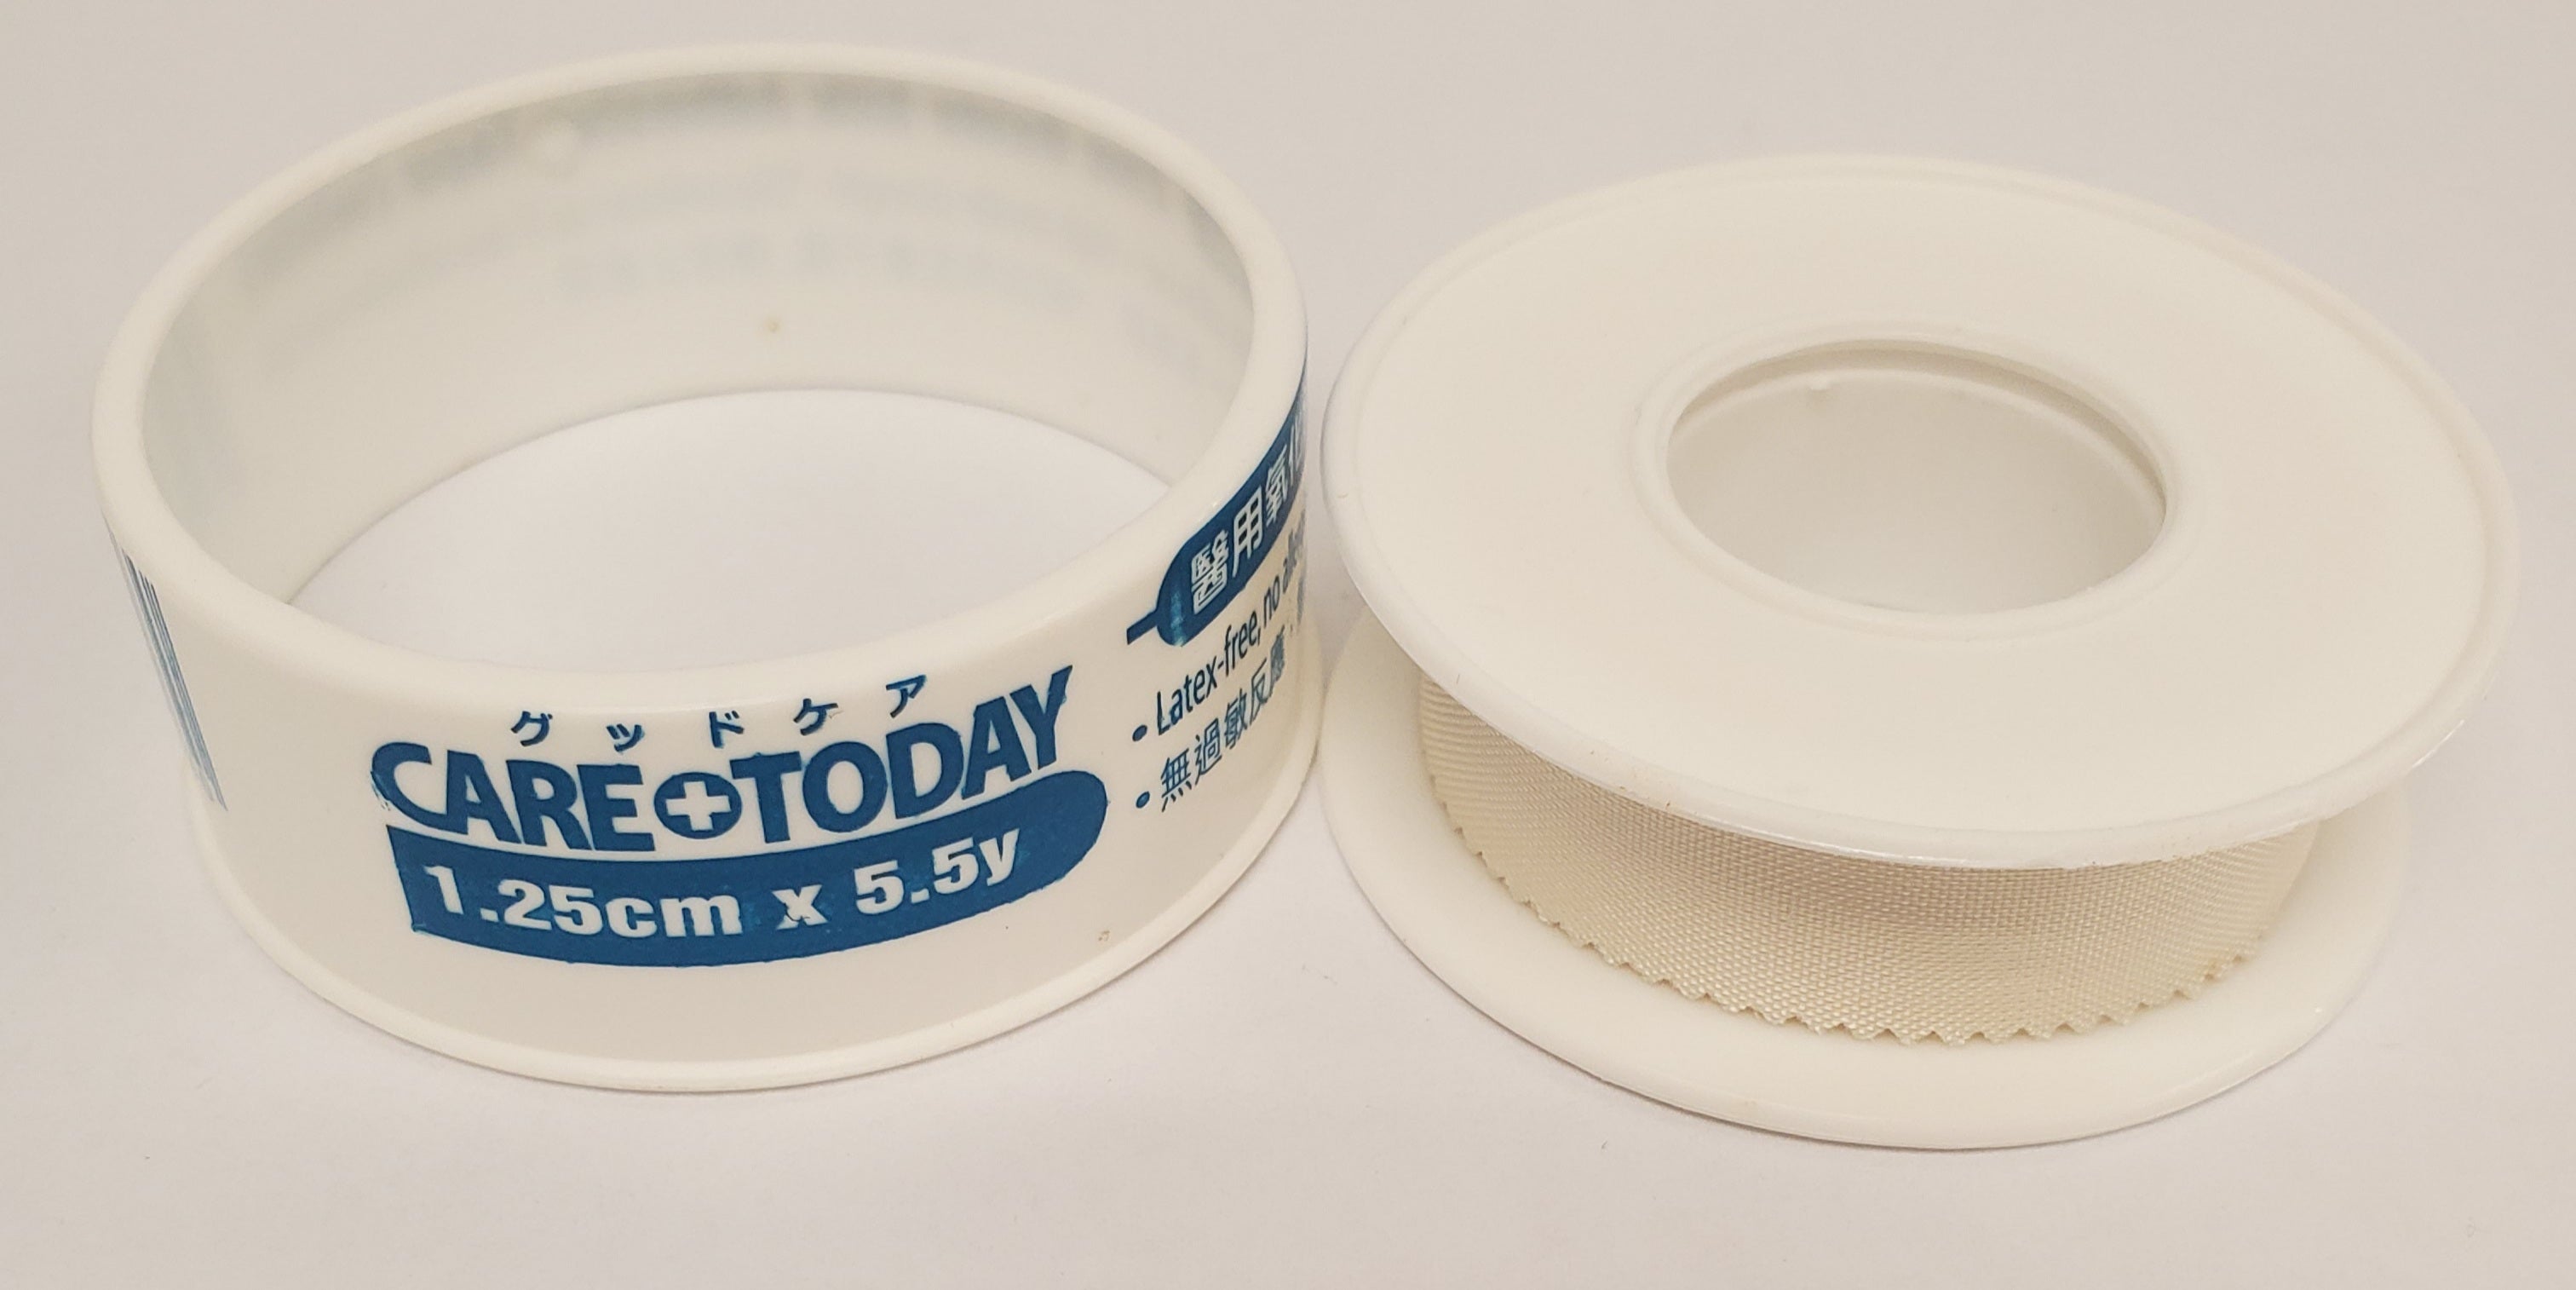 CareToday Zinc Oxide Silk Adhesive Tape (White) - 1.25cm X 5.5y